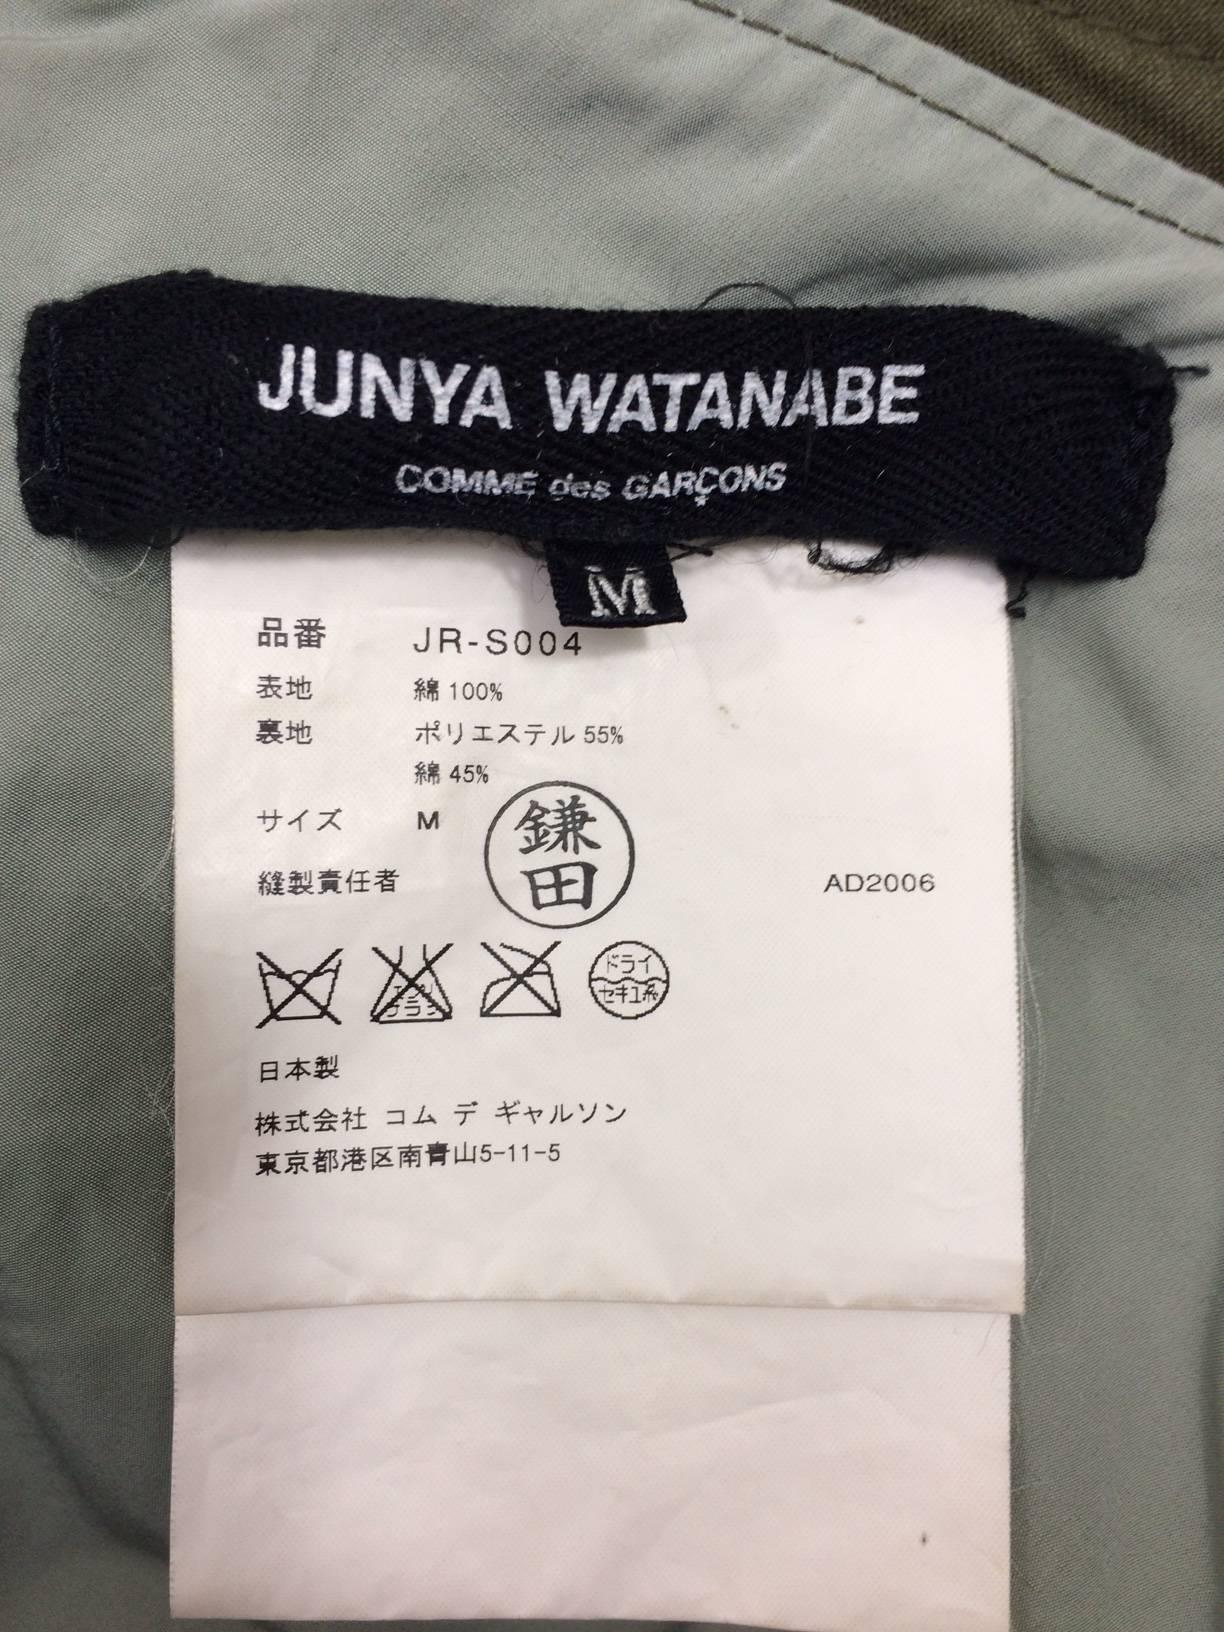 Junya Watanabe Commes des Garcons 2006 Deconstructed Military Skirt 1